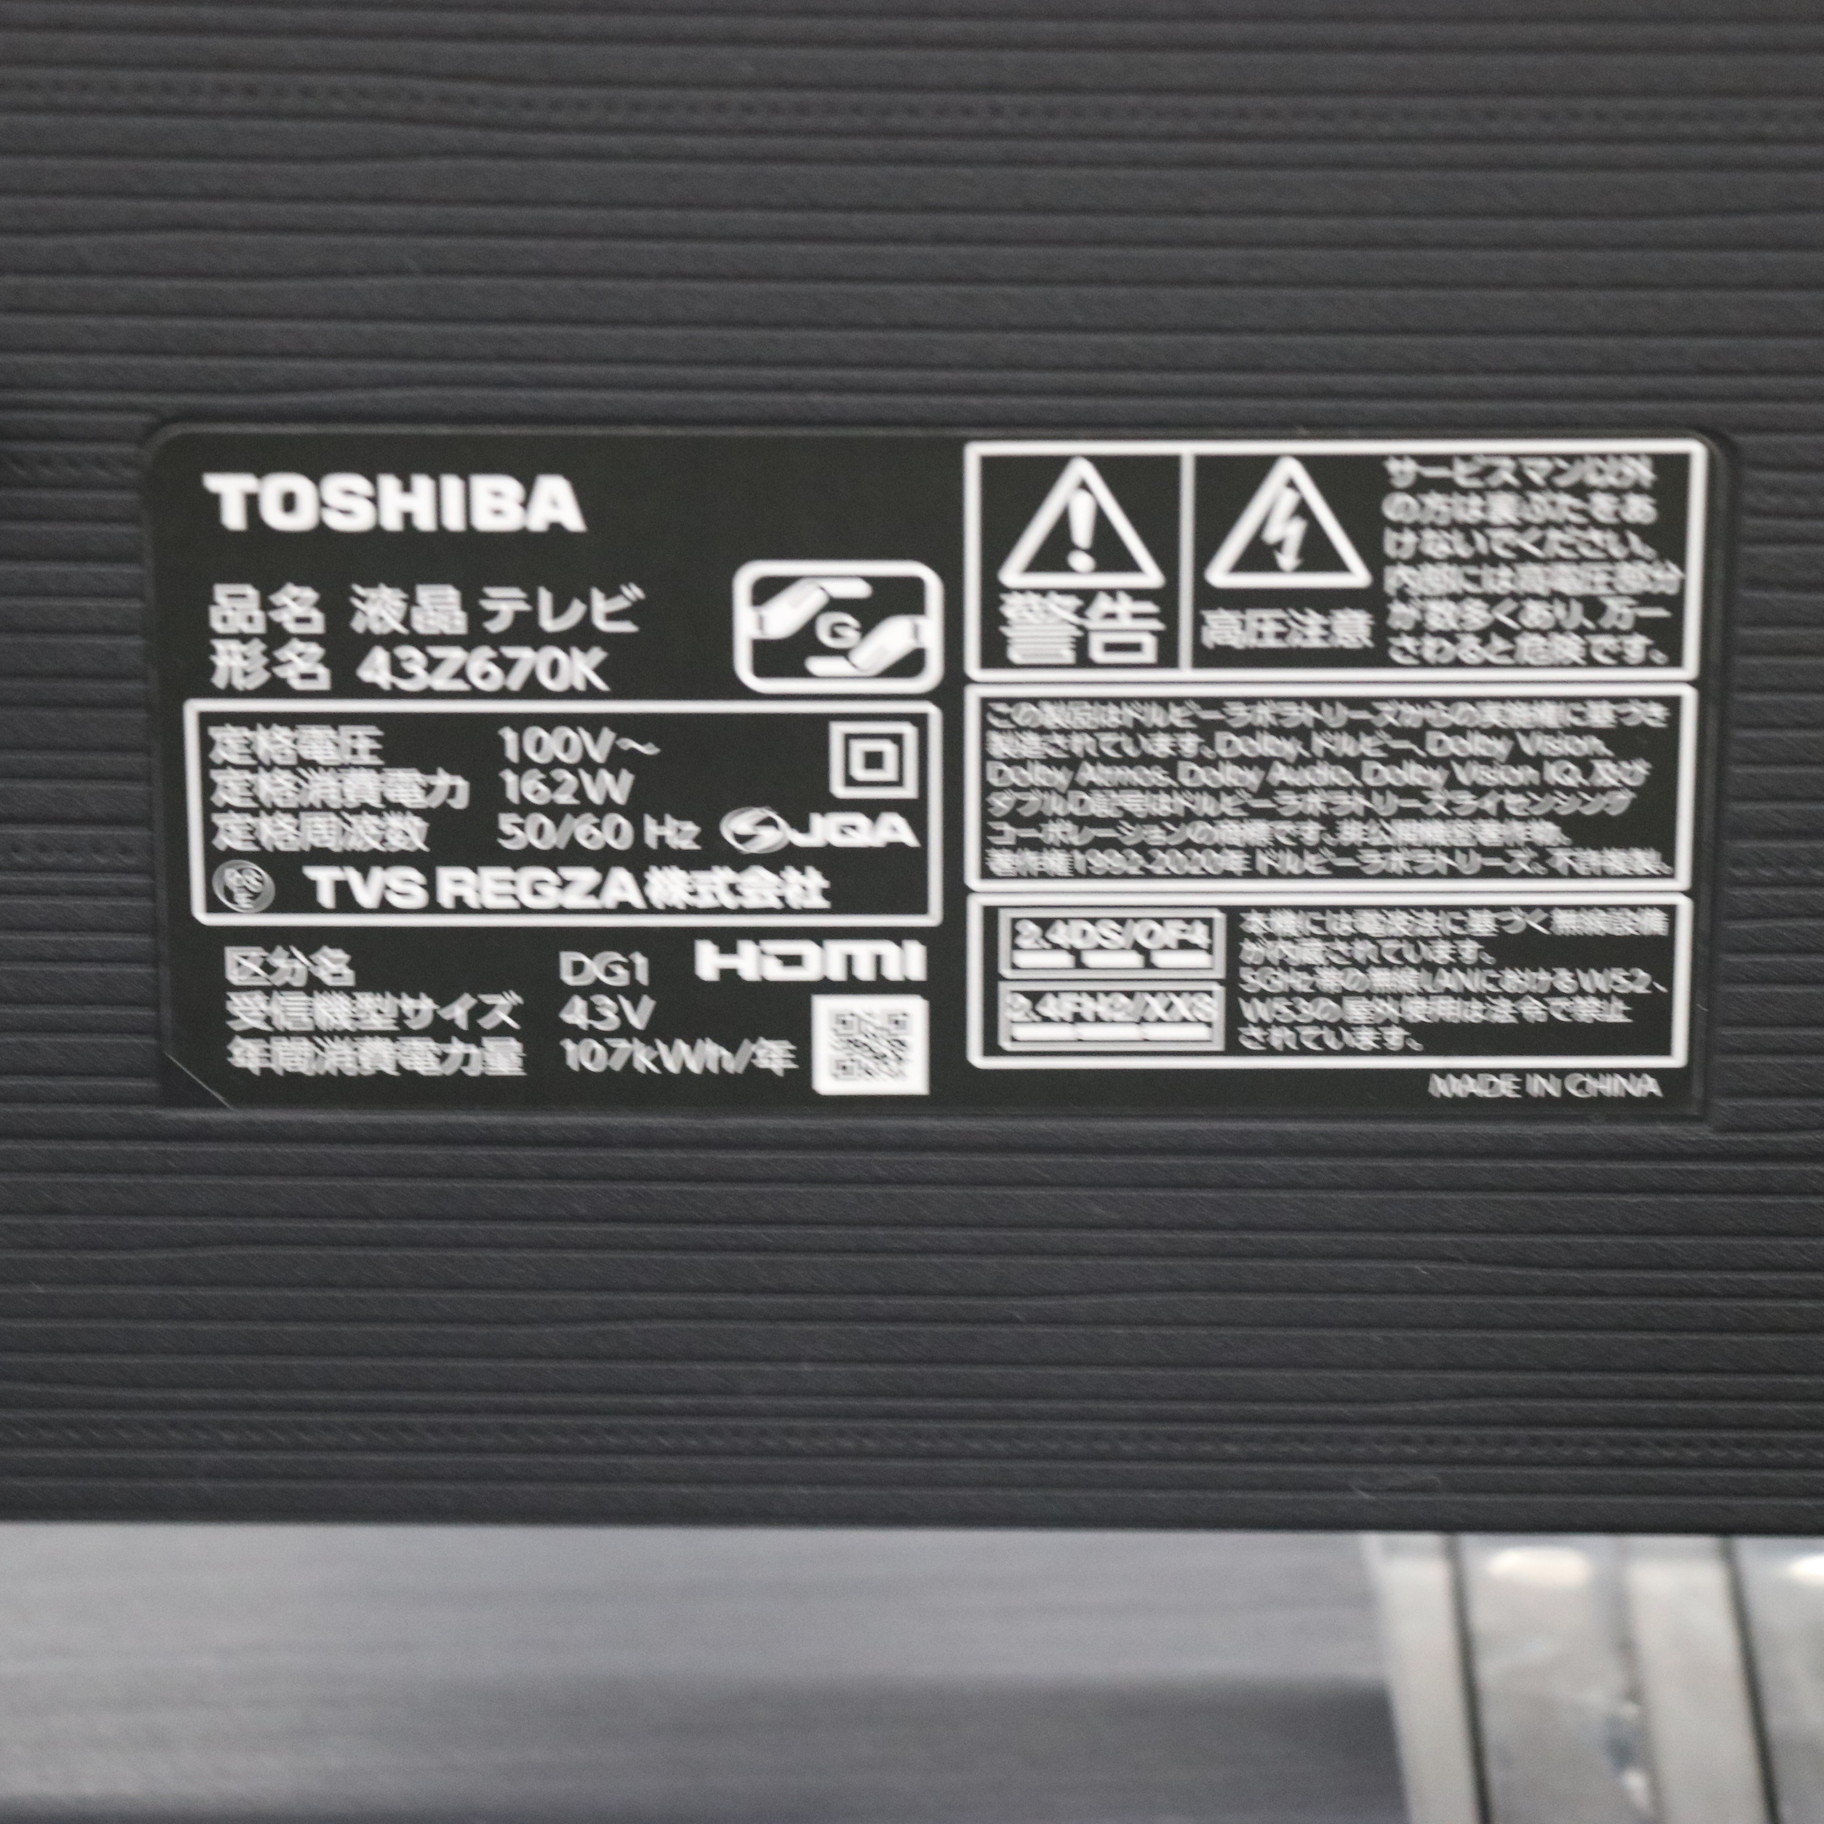 TOSHIBA REGZA 43Z670K 訳あり - テレビ/映像機器